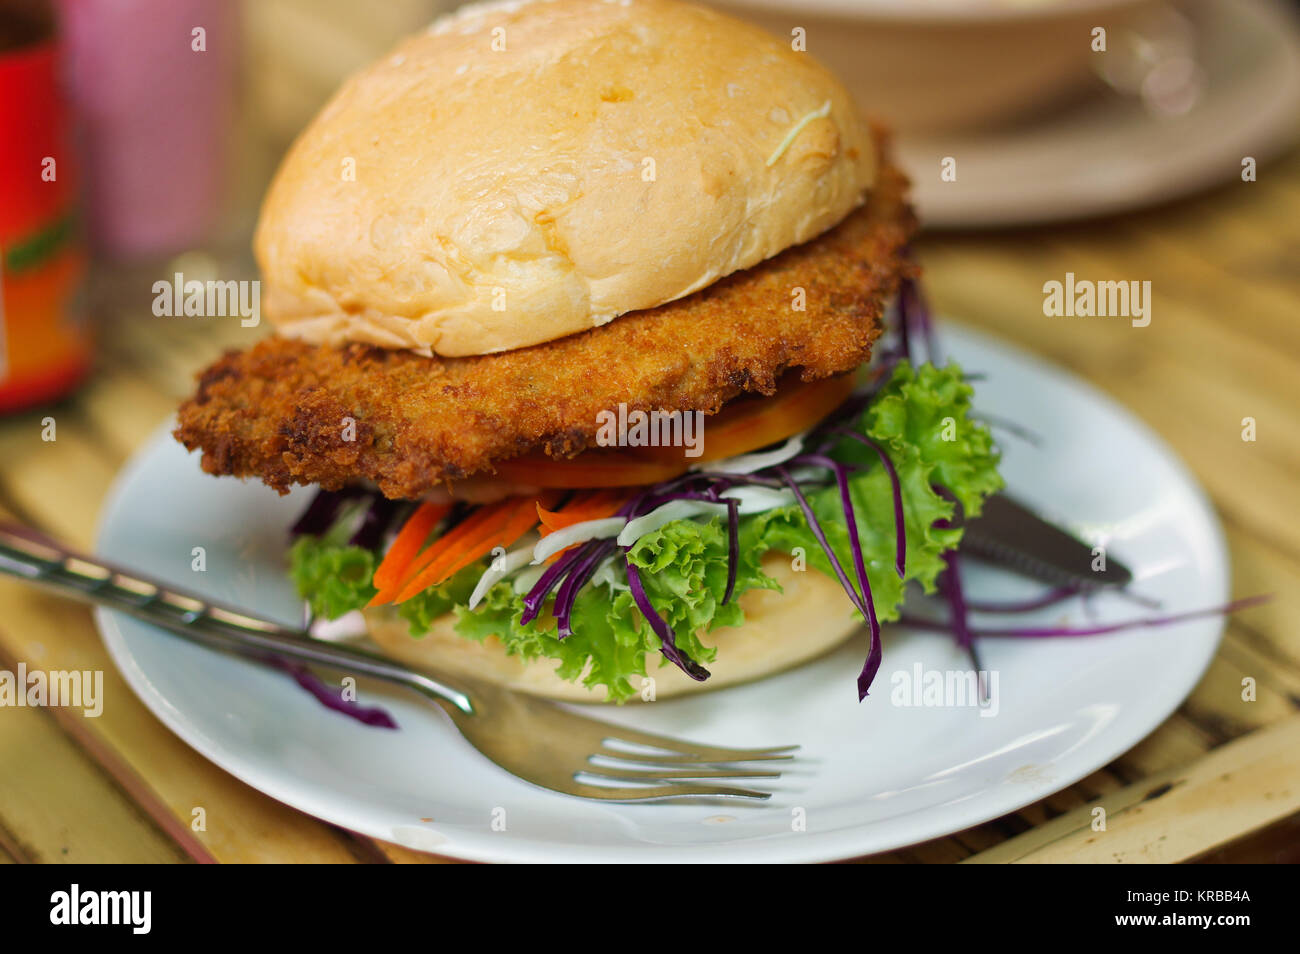 Hamburger Vegetariano fatto da verdura e pane grattugiato Foto Stock